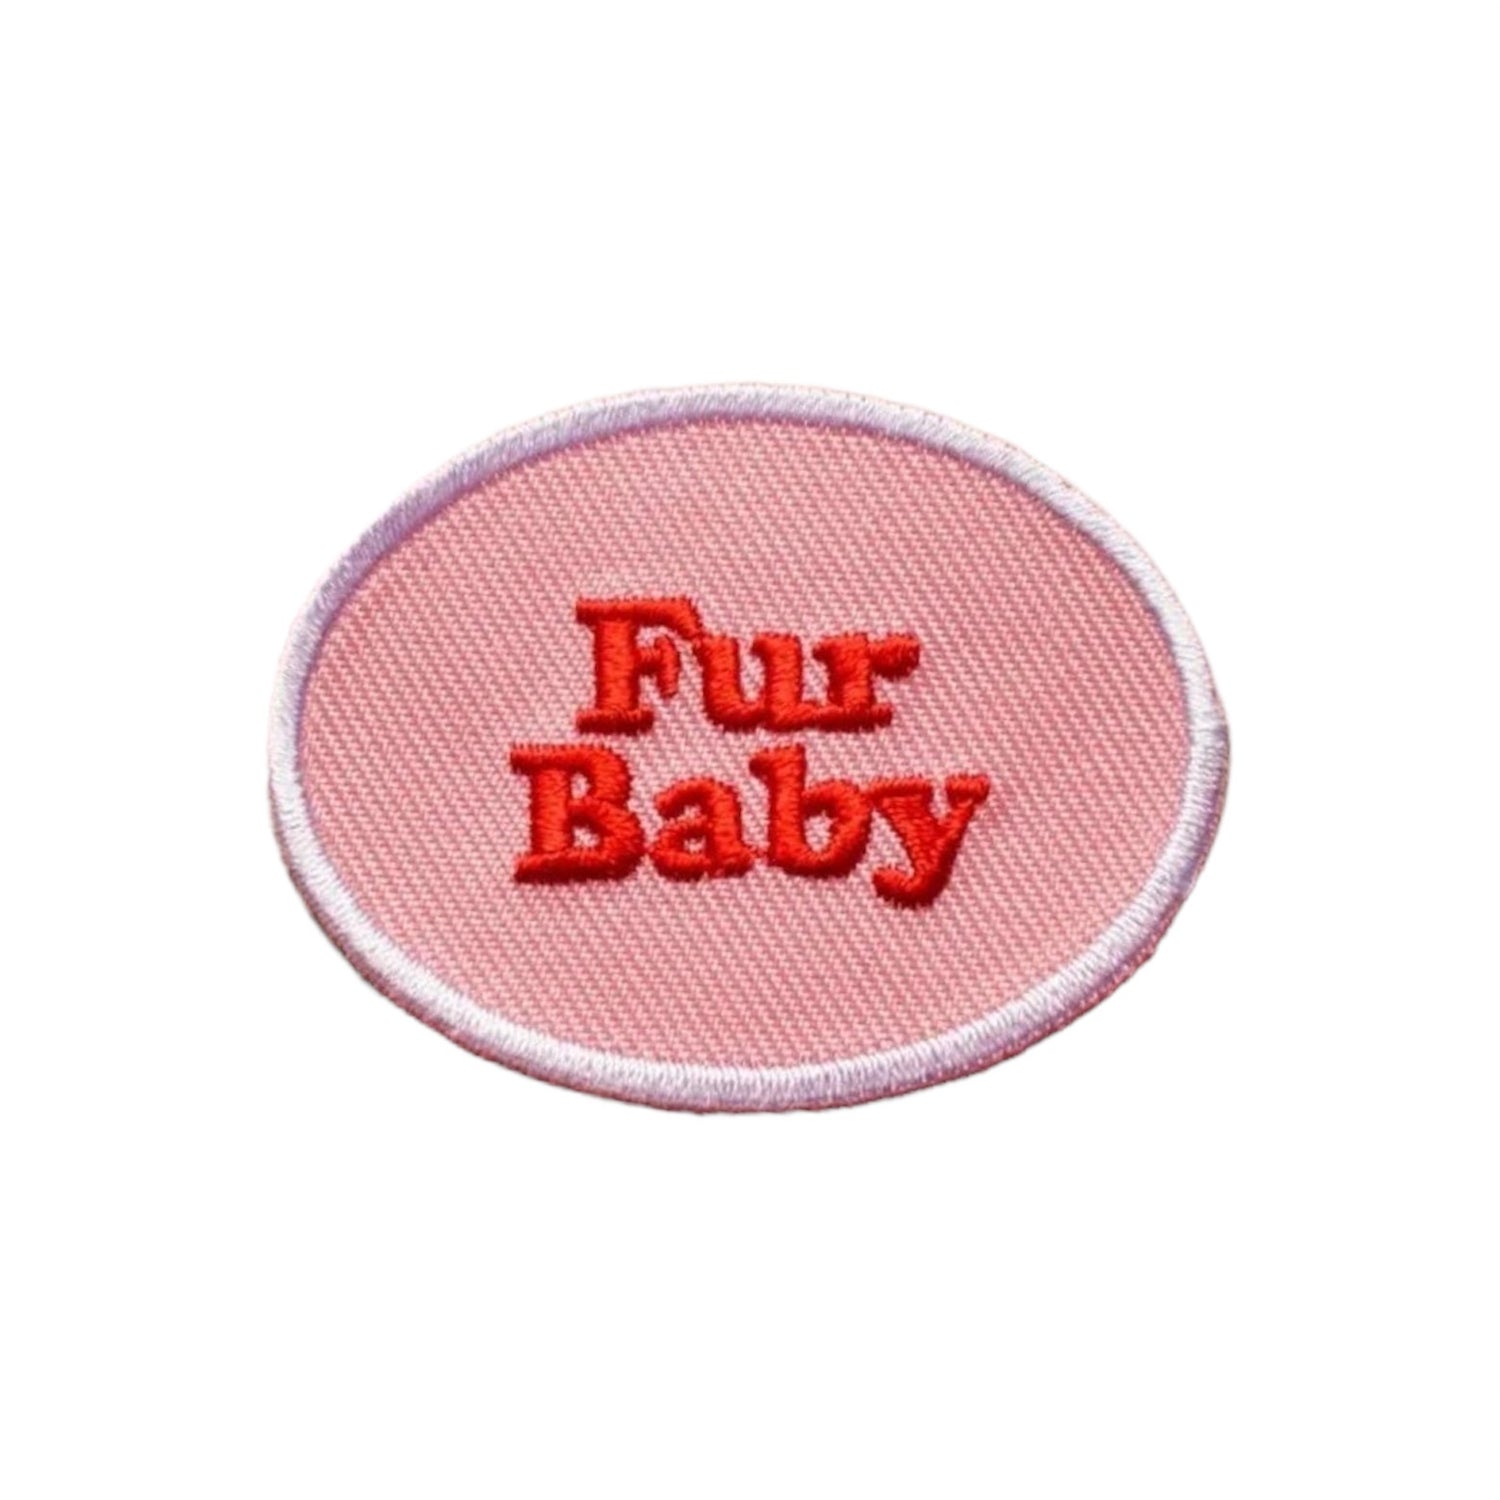 Fur Baby Badge